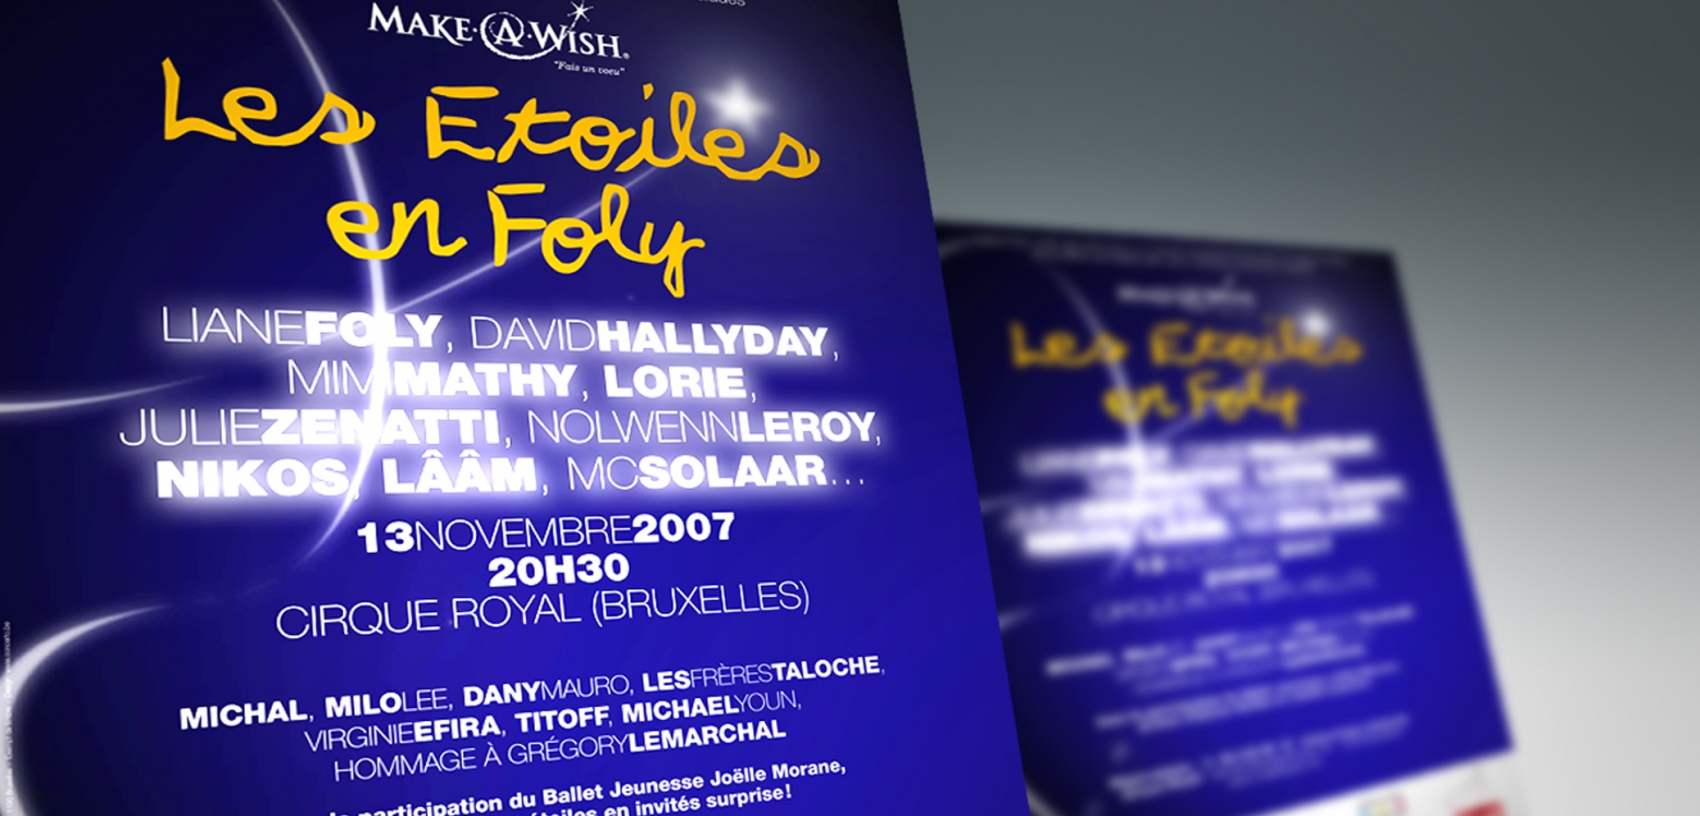 Make A Wish - Promotion Concert 2007